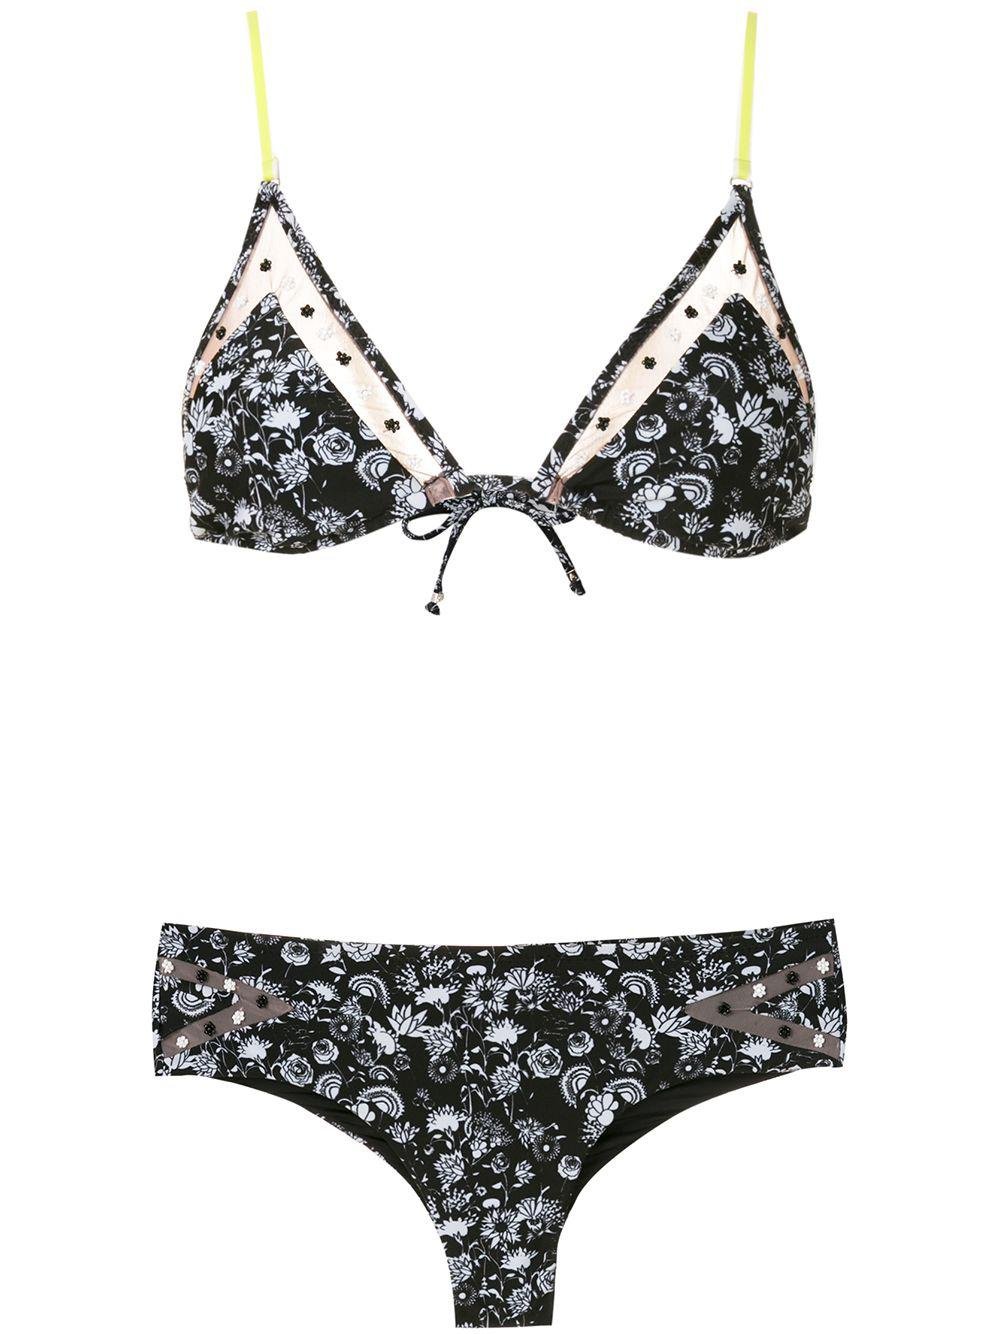 Margarida printed bikini set by AMIR SLAMA